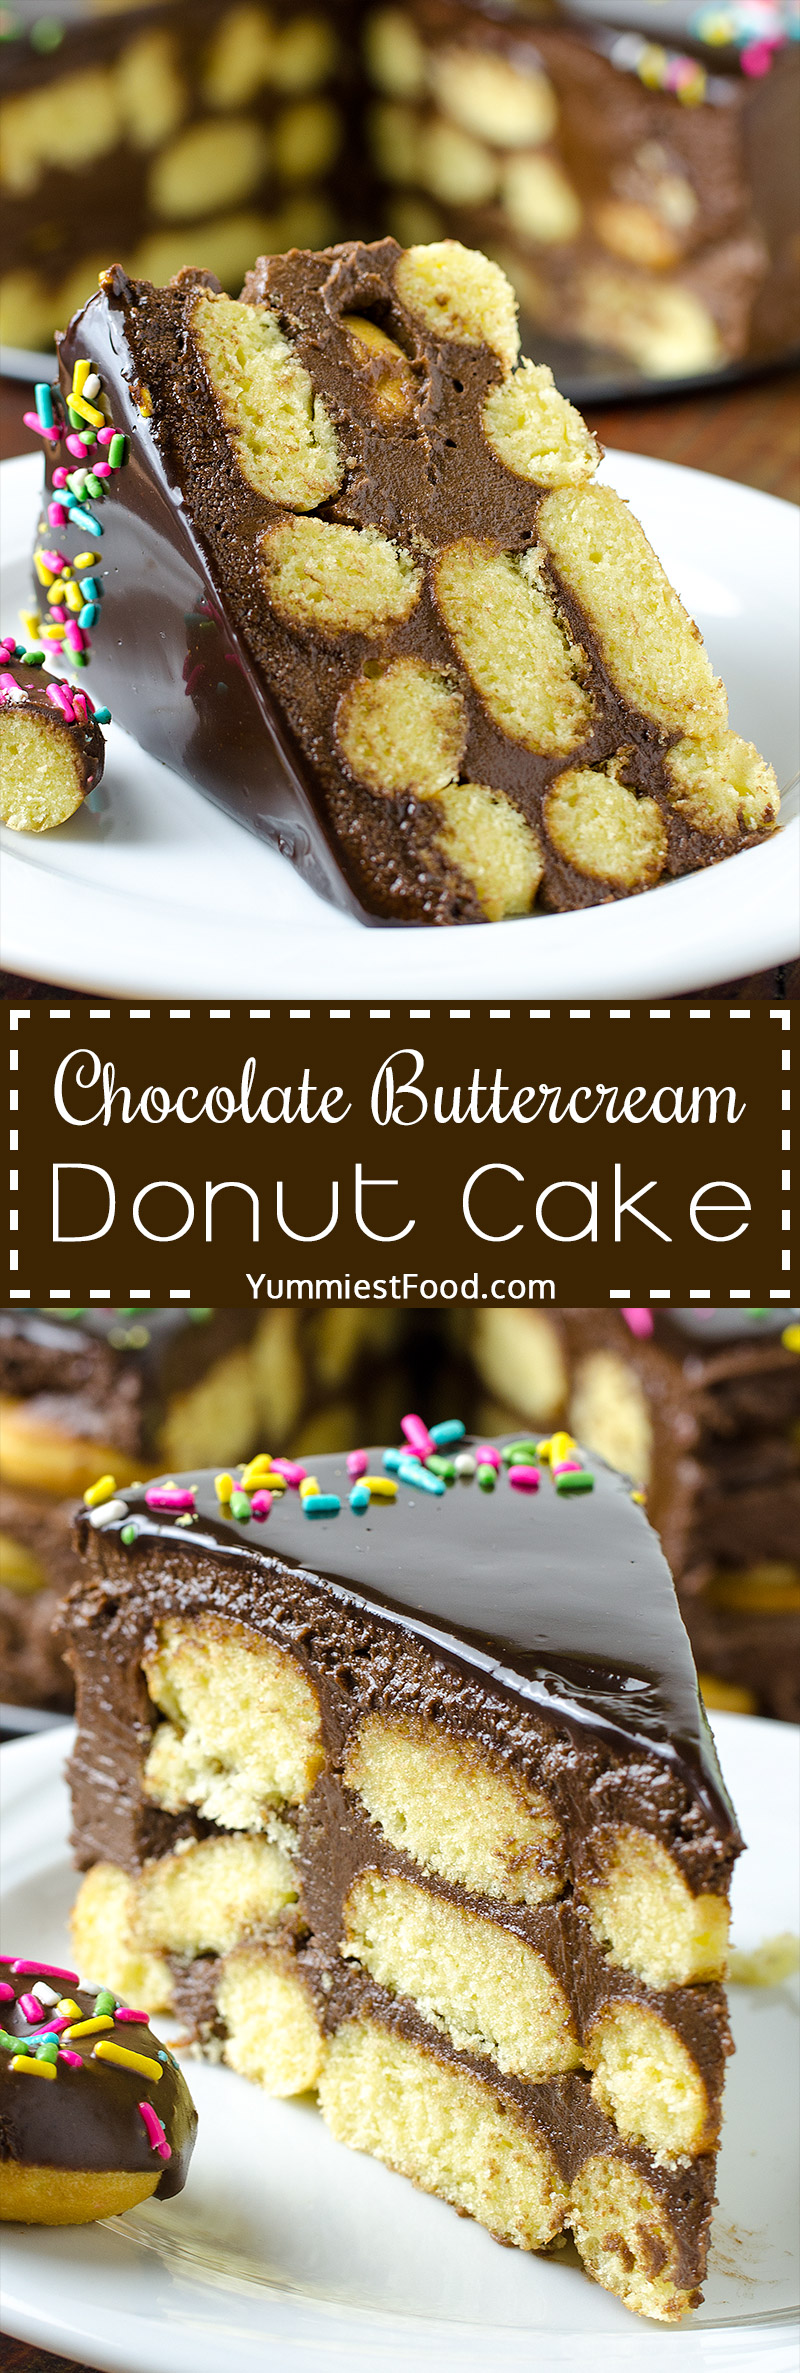 CHOCOLATE BUTTERCREAM DONUT CAKE - Chocolate buttercream and homemade mini donuts